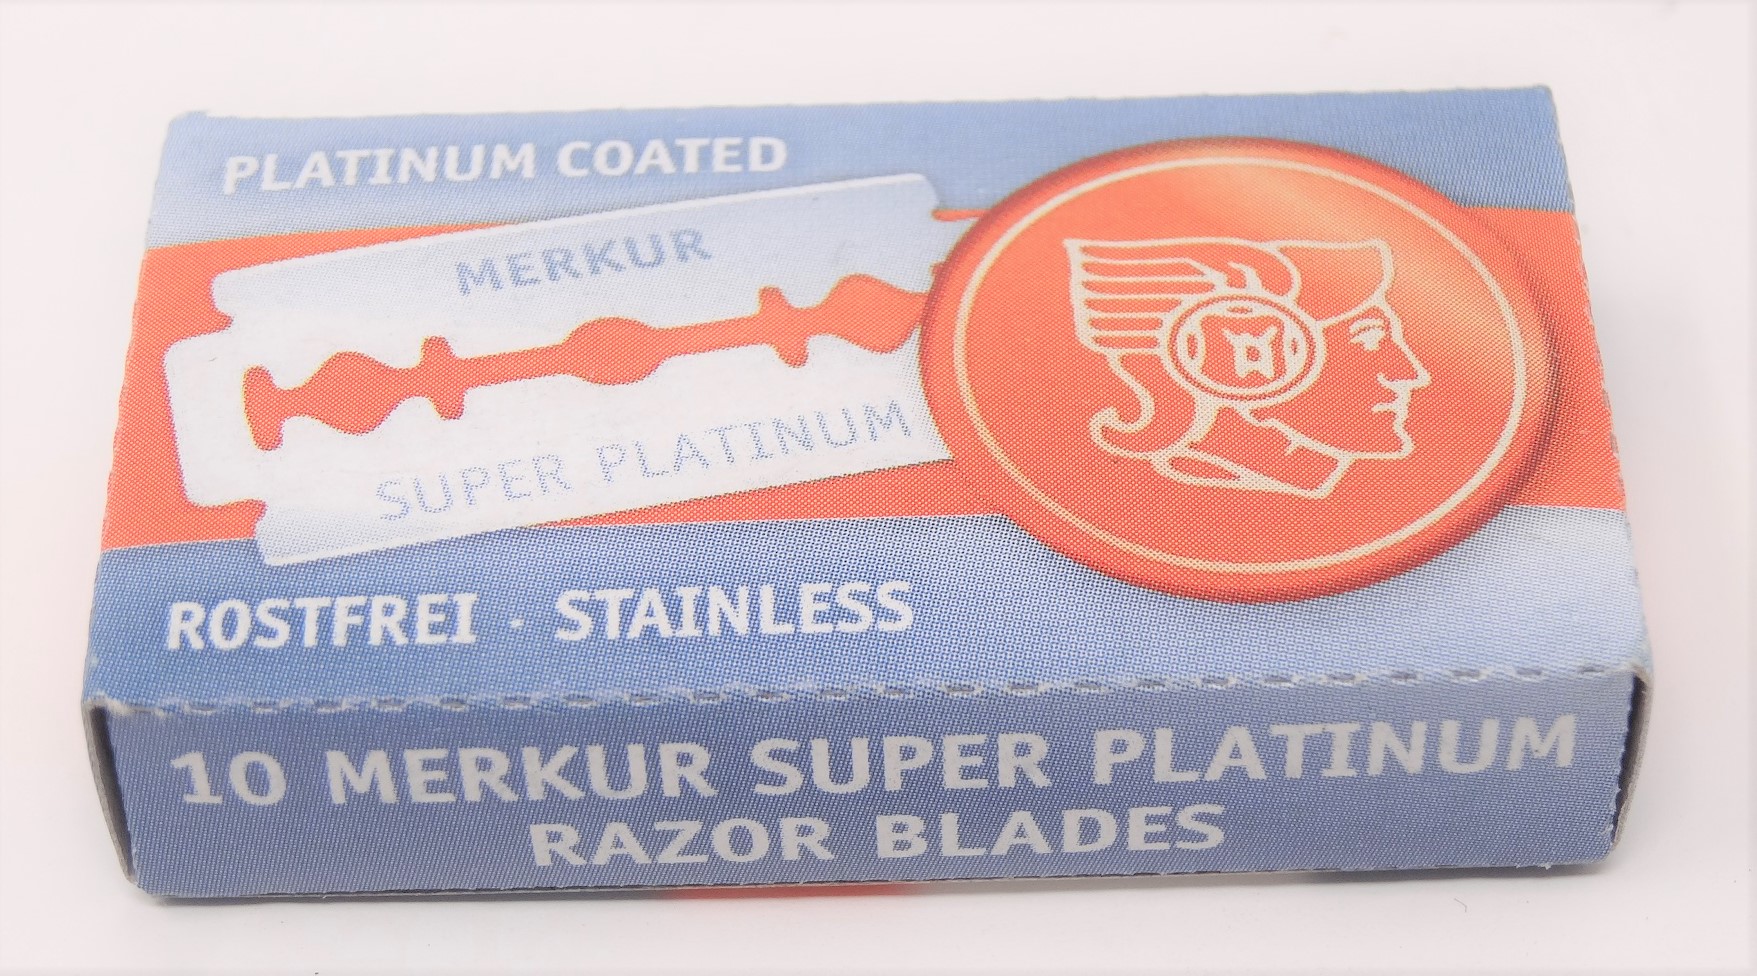 Razor Blades from Merkur